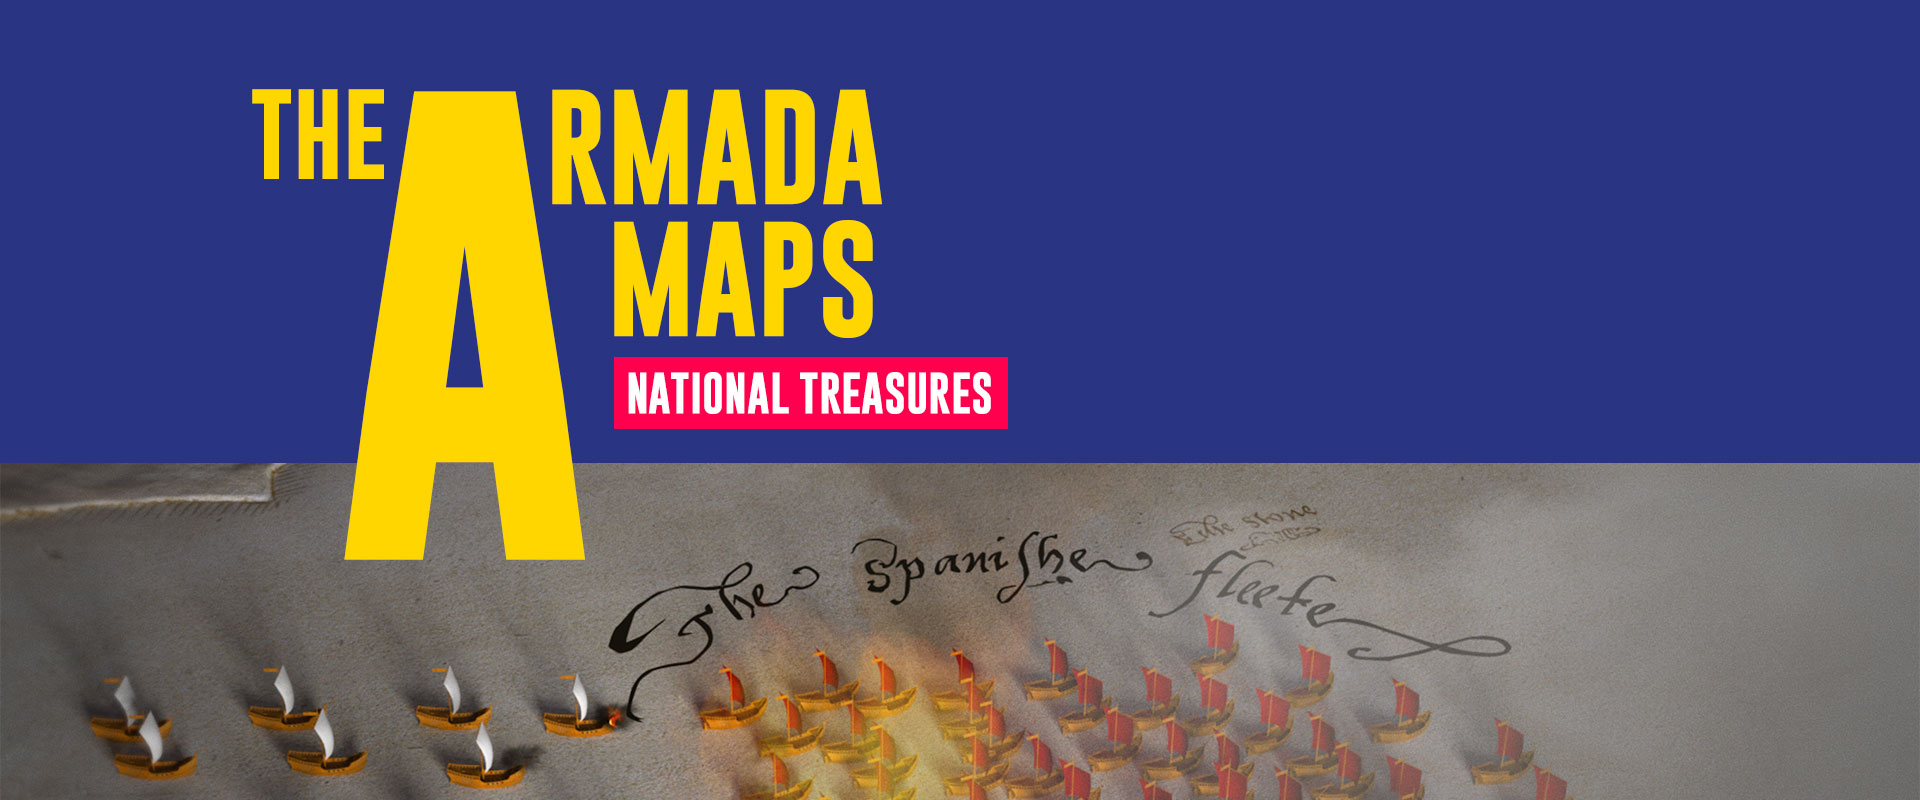 Armada Maps National Treasures Banner